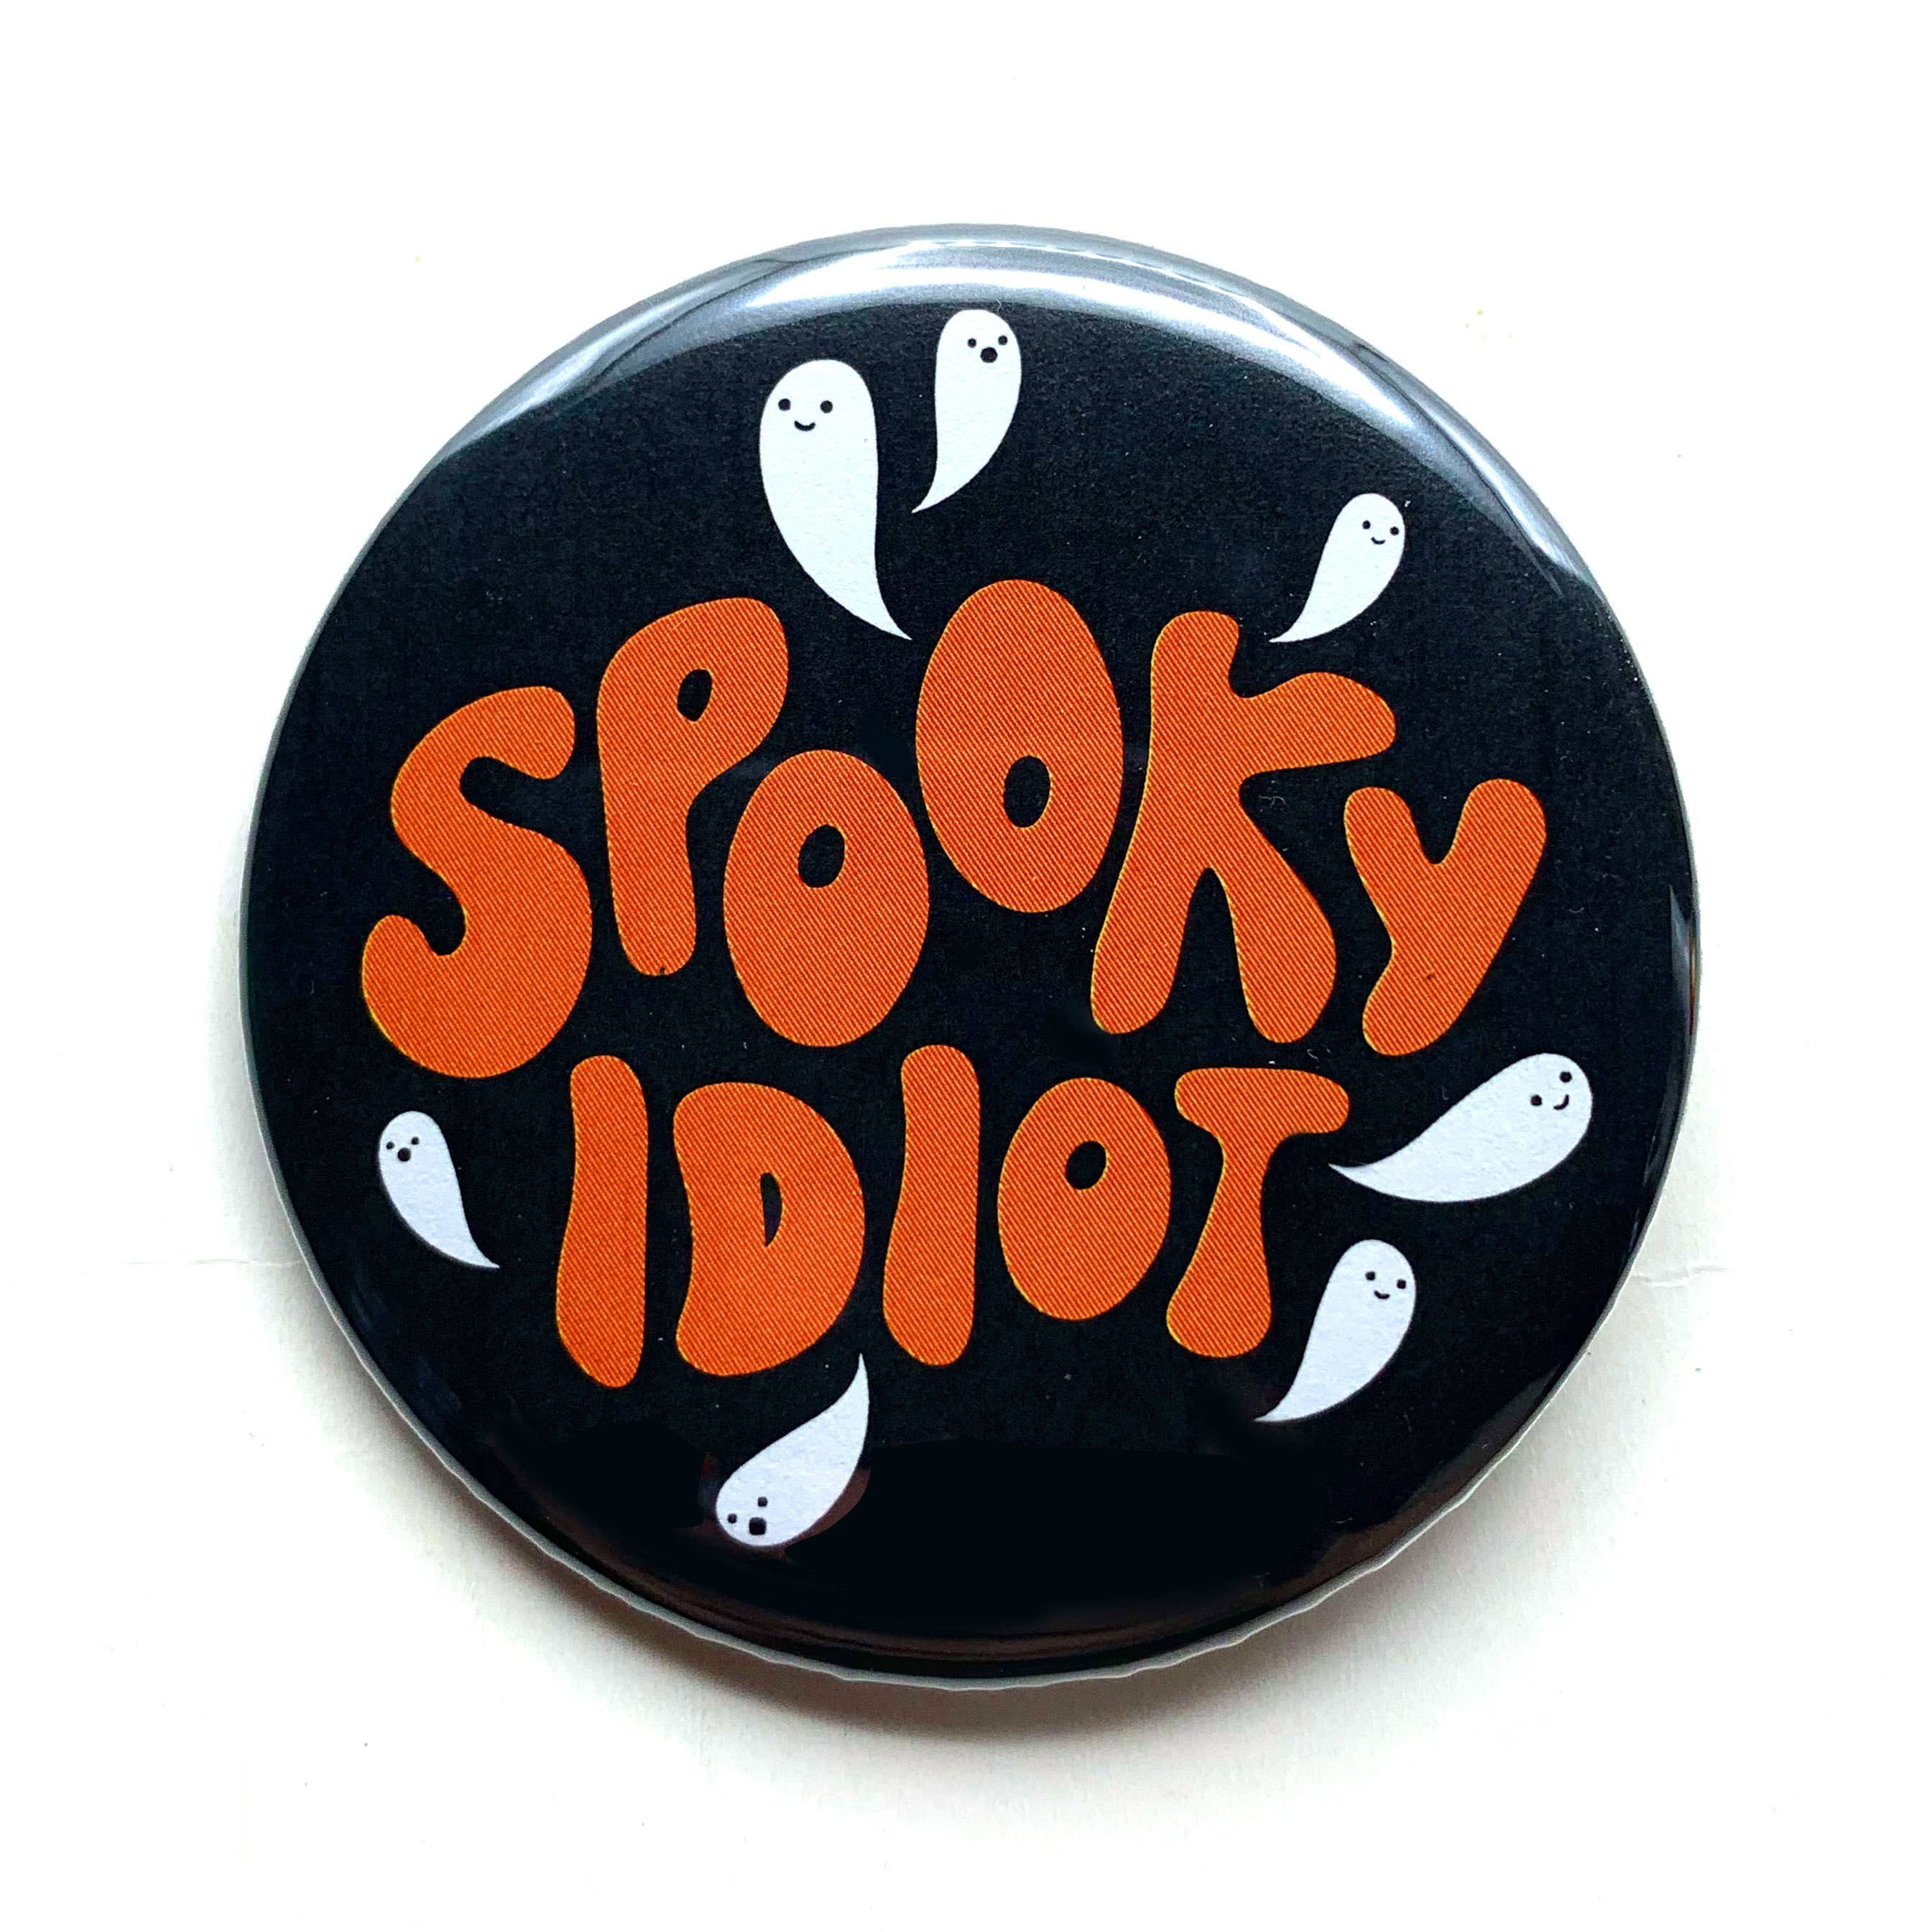 Spooky Idiot Pinback Button